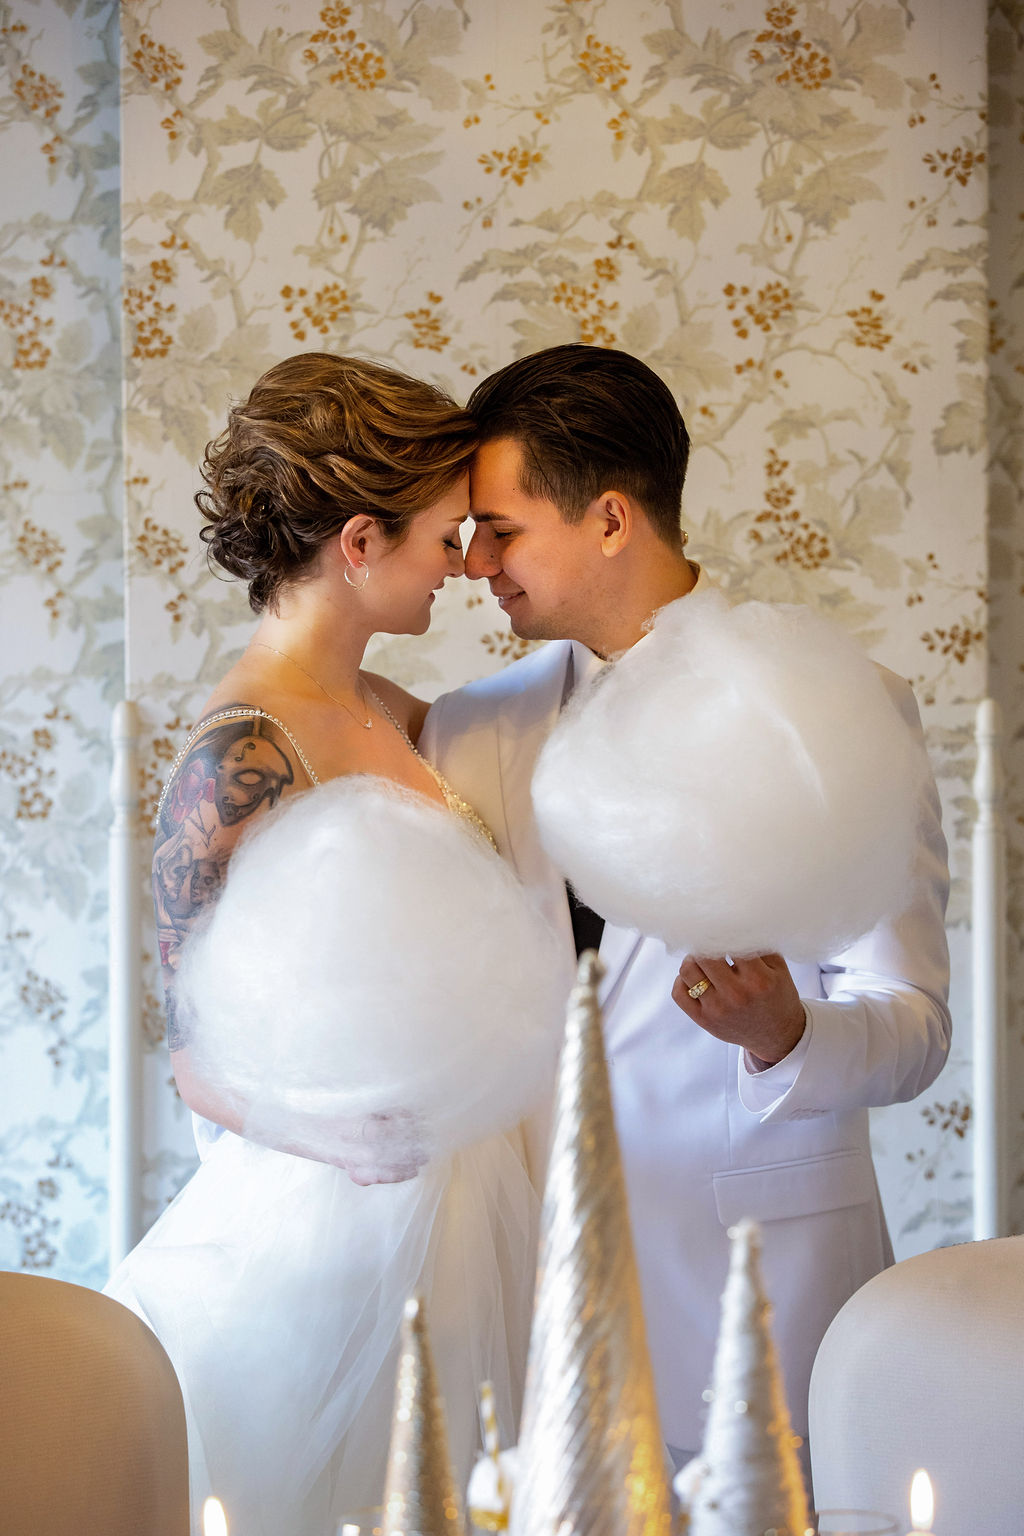 Romantic Winter Wedding With Opulent Styling at Hotel Alex Johnson, USA